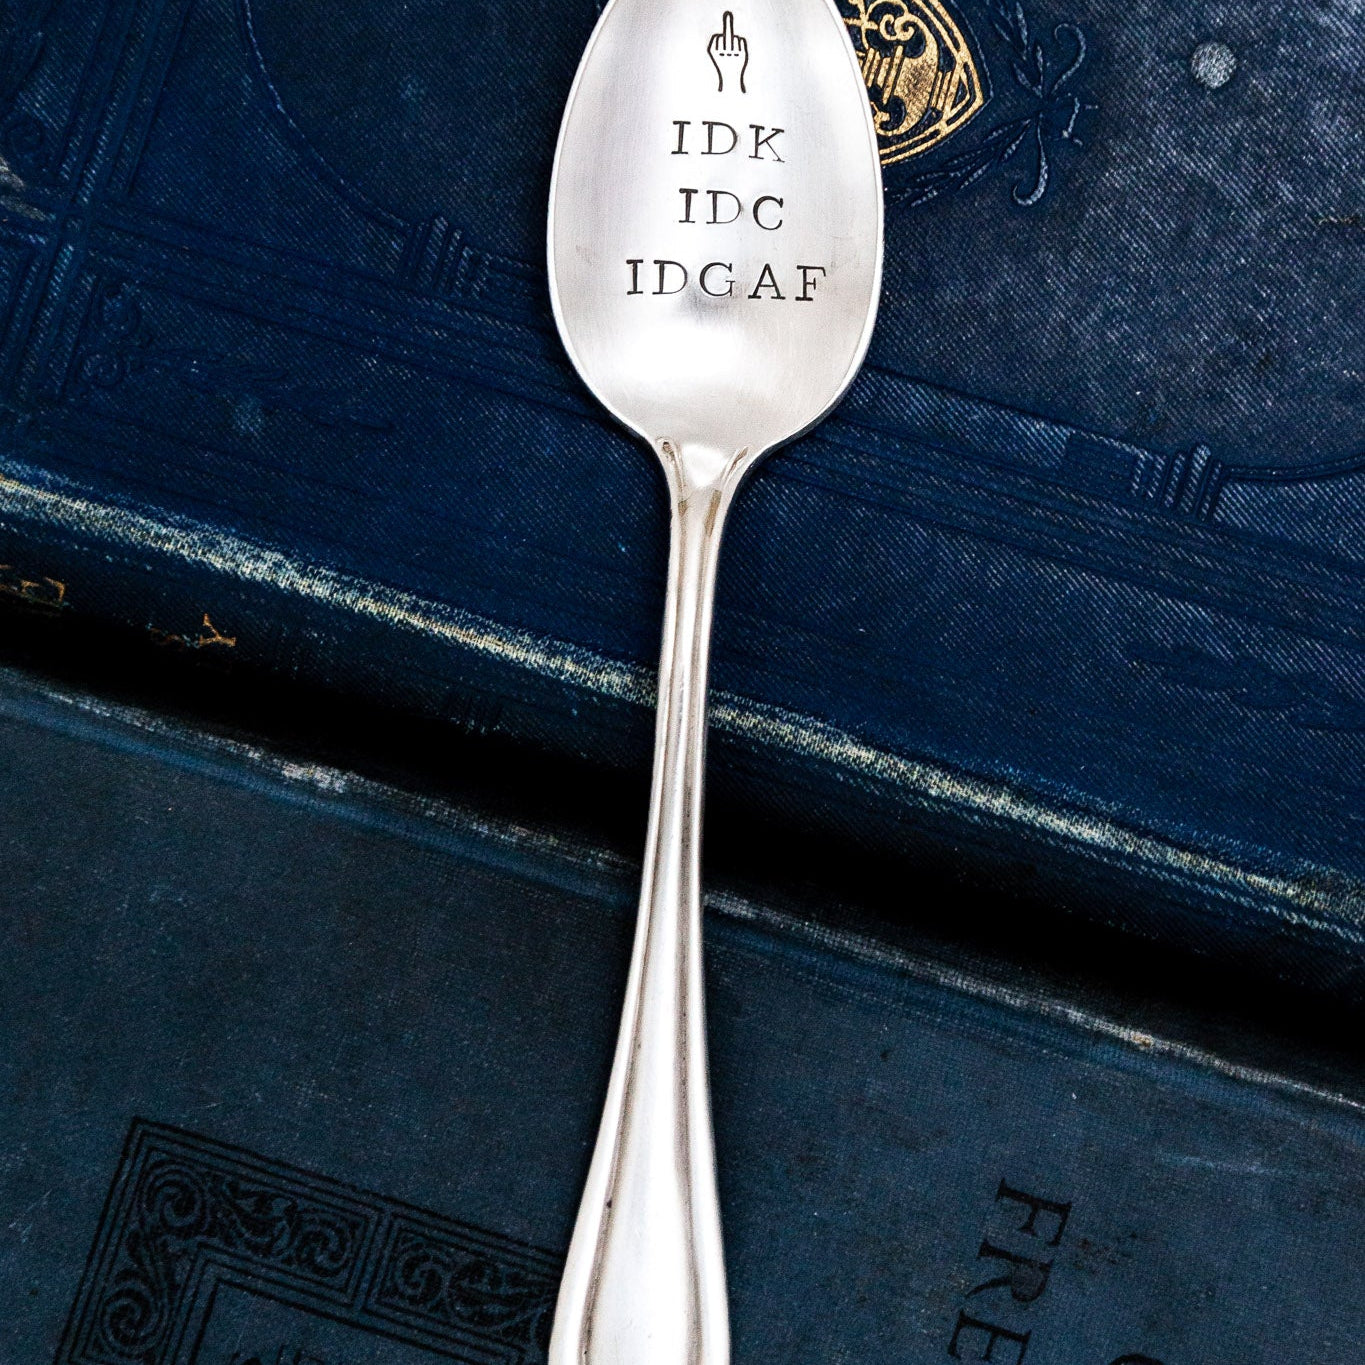 IDK IDC IDGAF, Hand Stamped Vintage Spoon Spoons callistafaye   